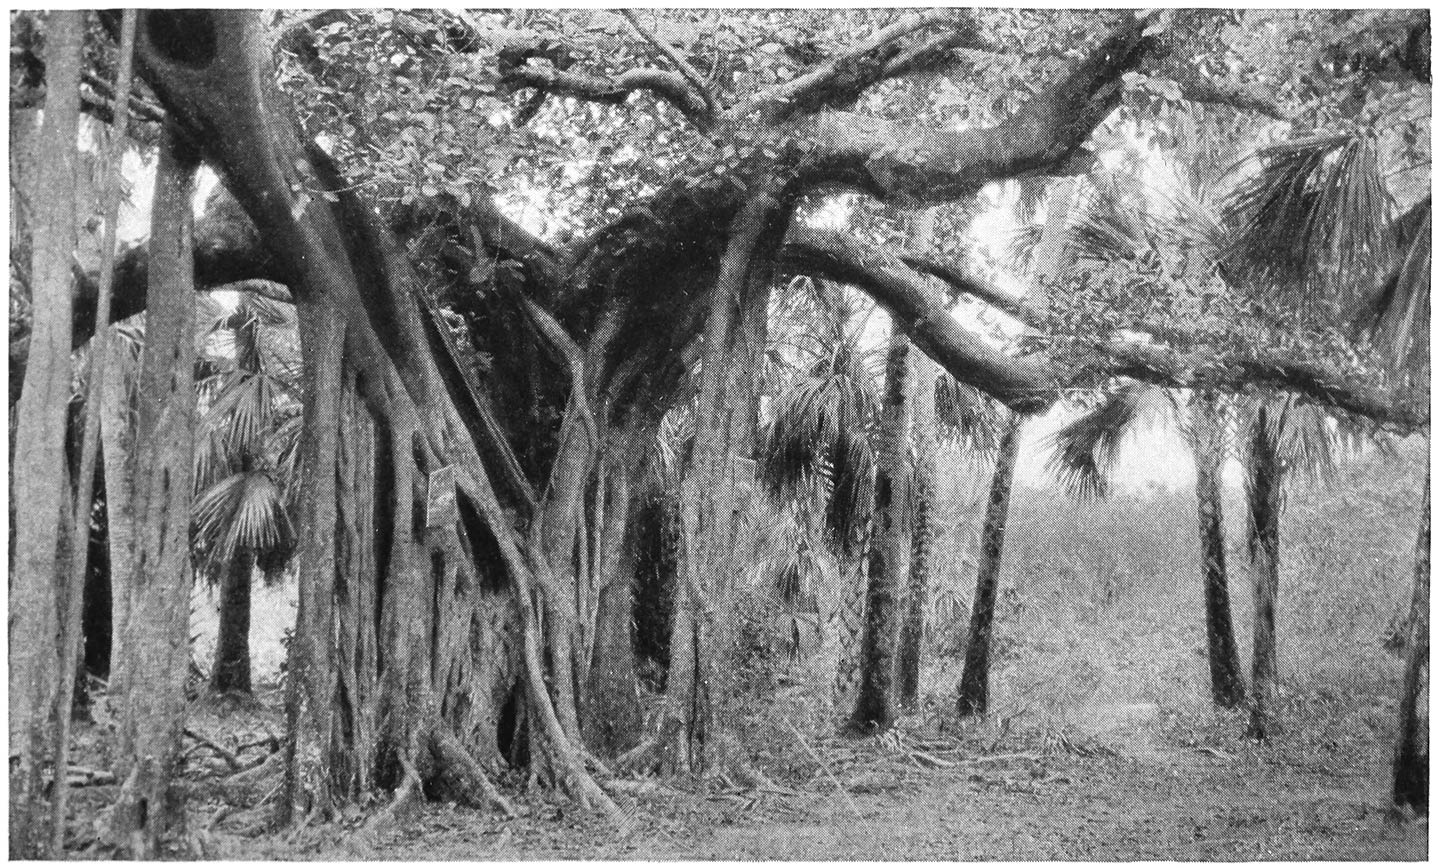 BANYAN TREE. (IN “SONGS OF HAWAII” “THE GRANDFATHER TREE”)